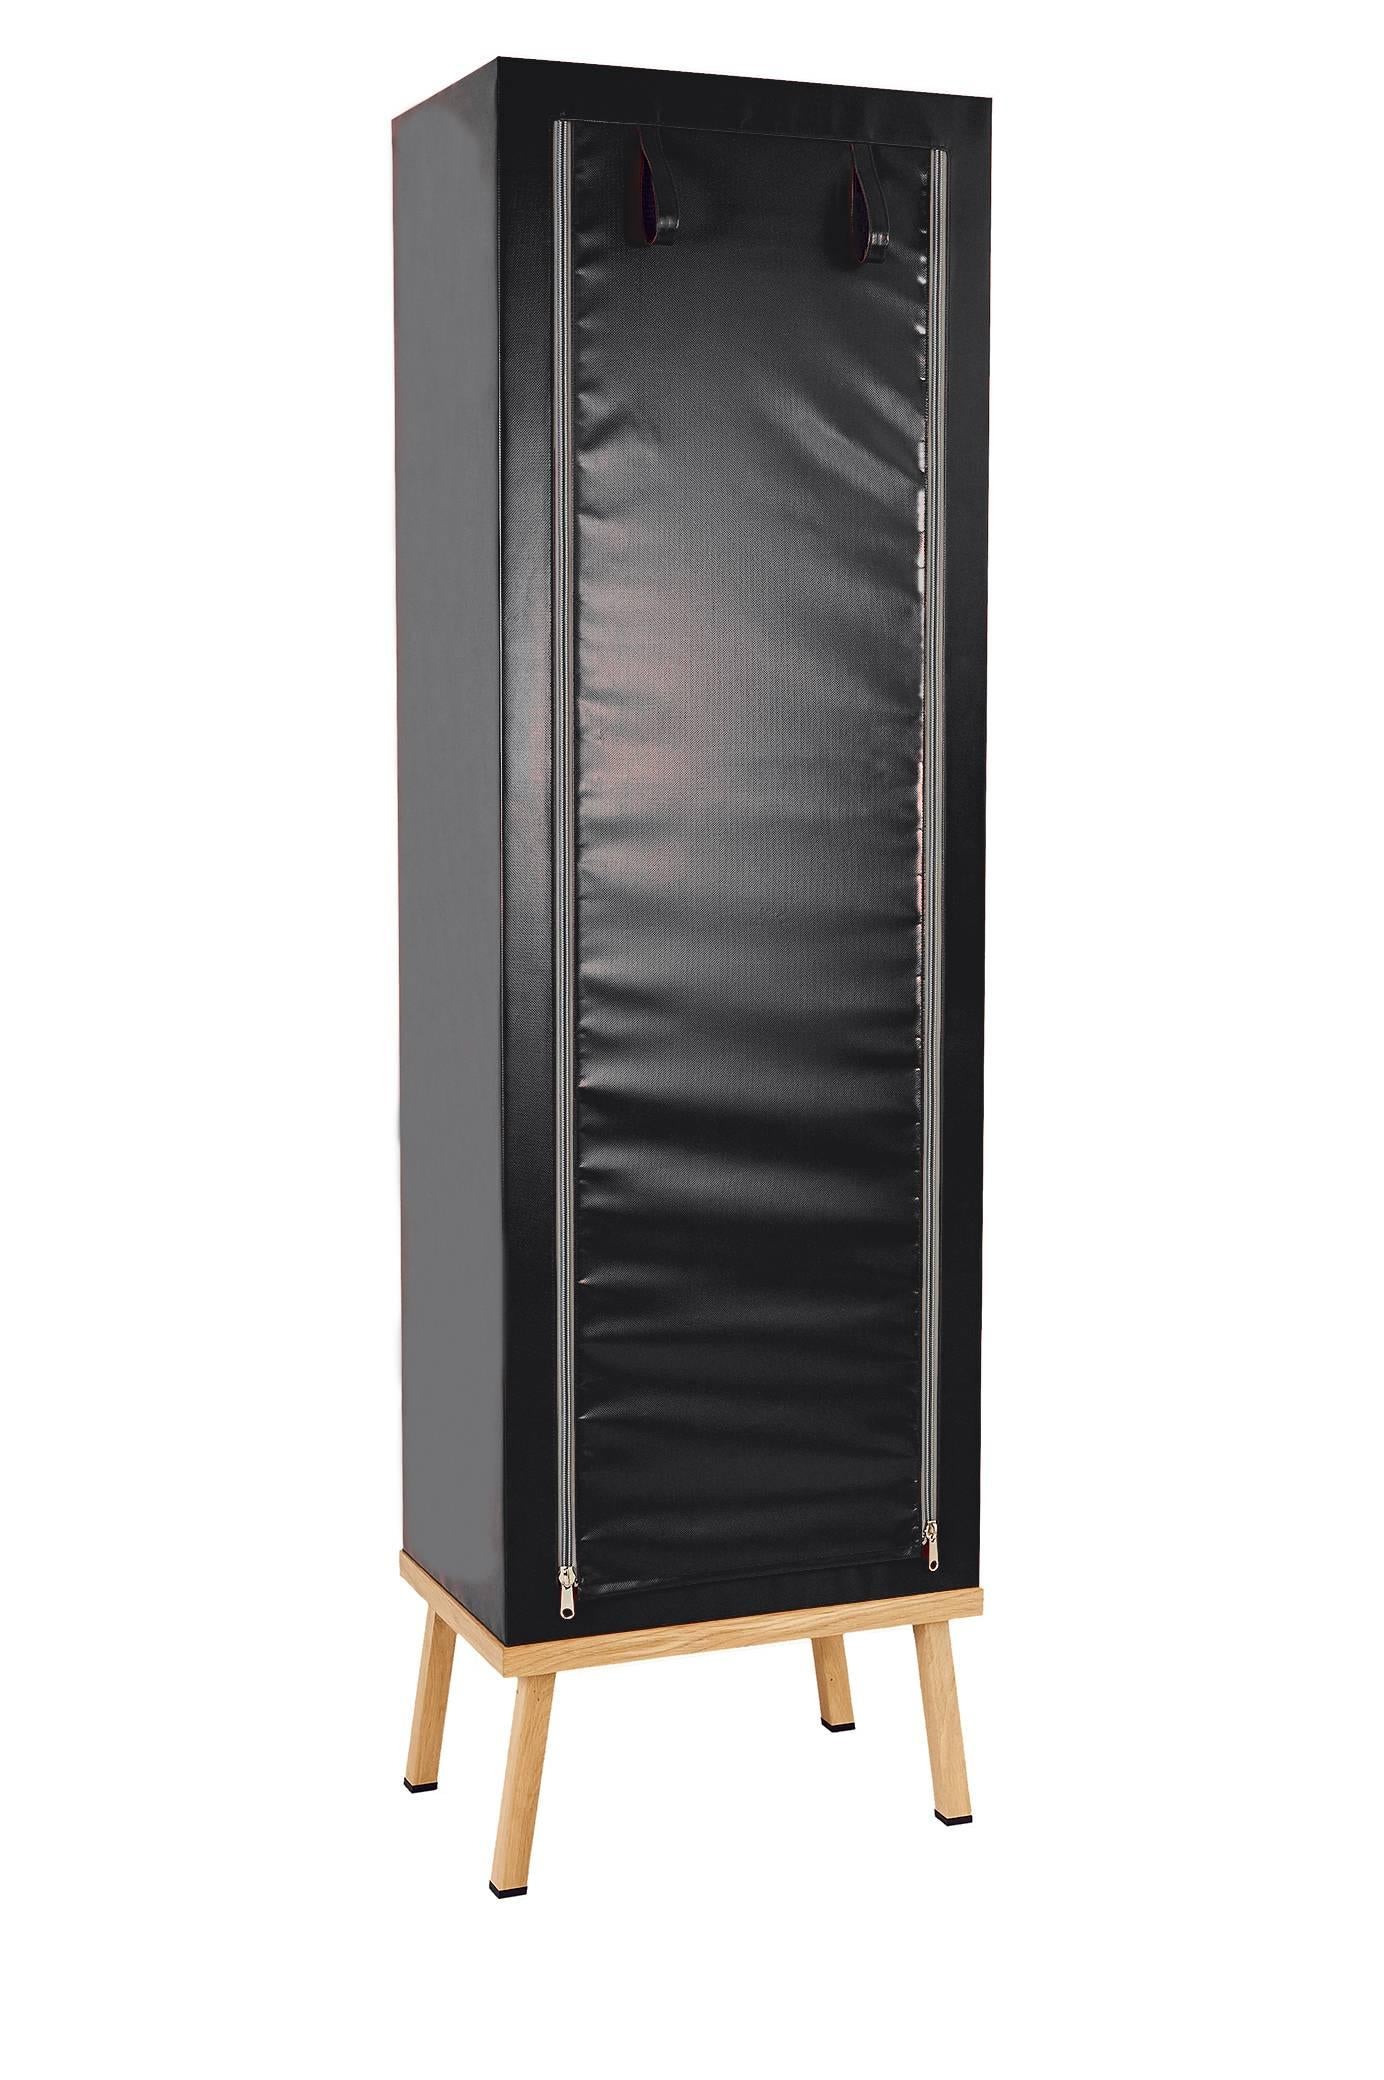 Visser and Meijwaard Truecolors cabinet in black PVC cloth with zipper opening

Designed by Visser en Meijwaard 
Contemporary, Netherlands, 2015
PVC cloth, oakwood, rubber
Measures: H 78.75 in, W 23.75 in, D 15.75 in 

Lead time 8-10 weeks.